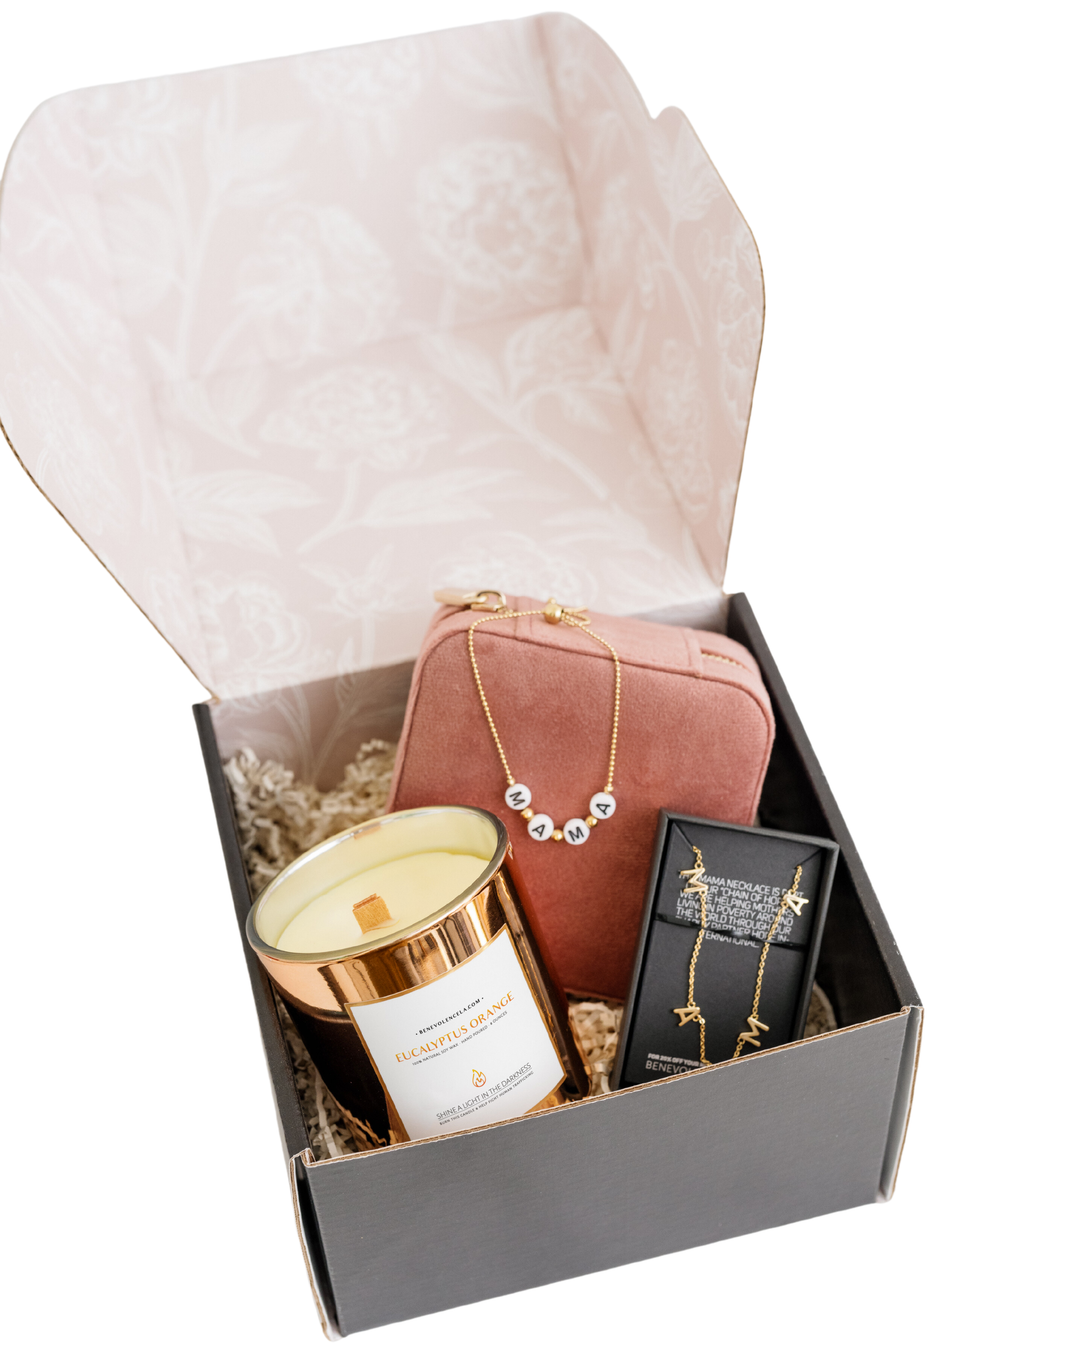 Mama Gift Box